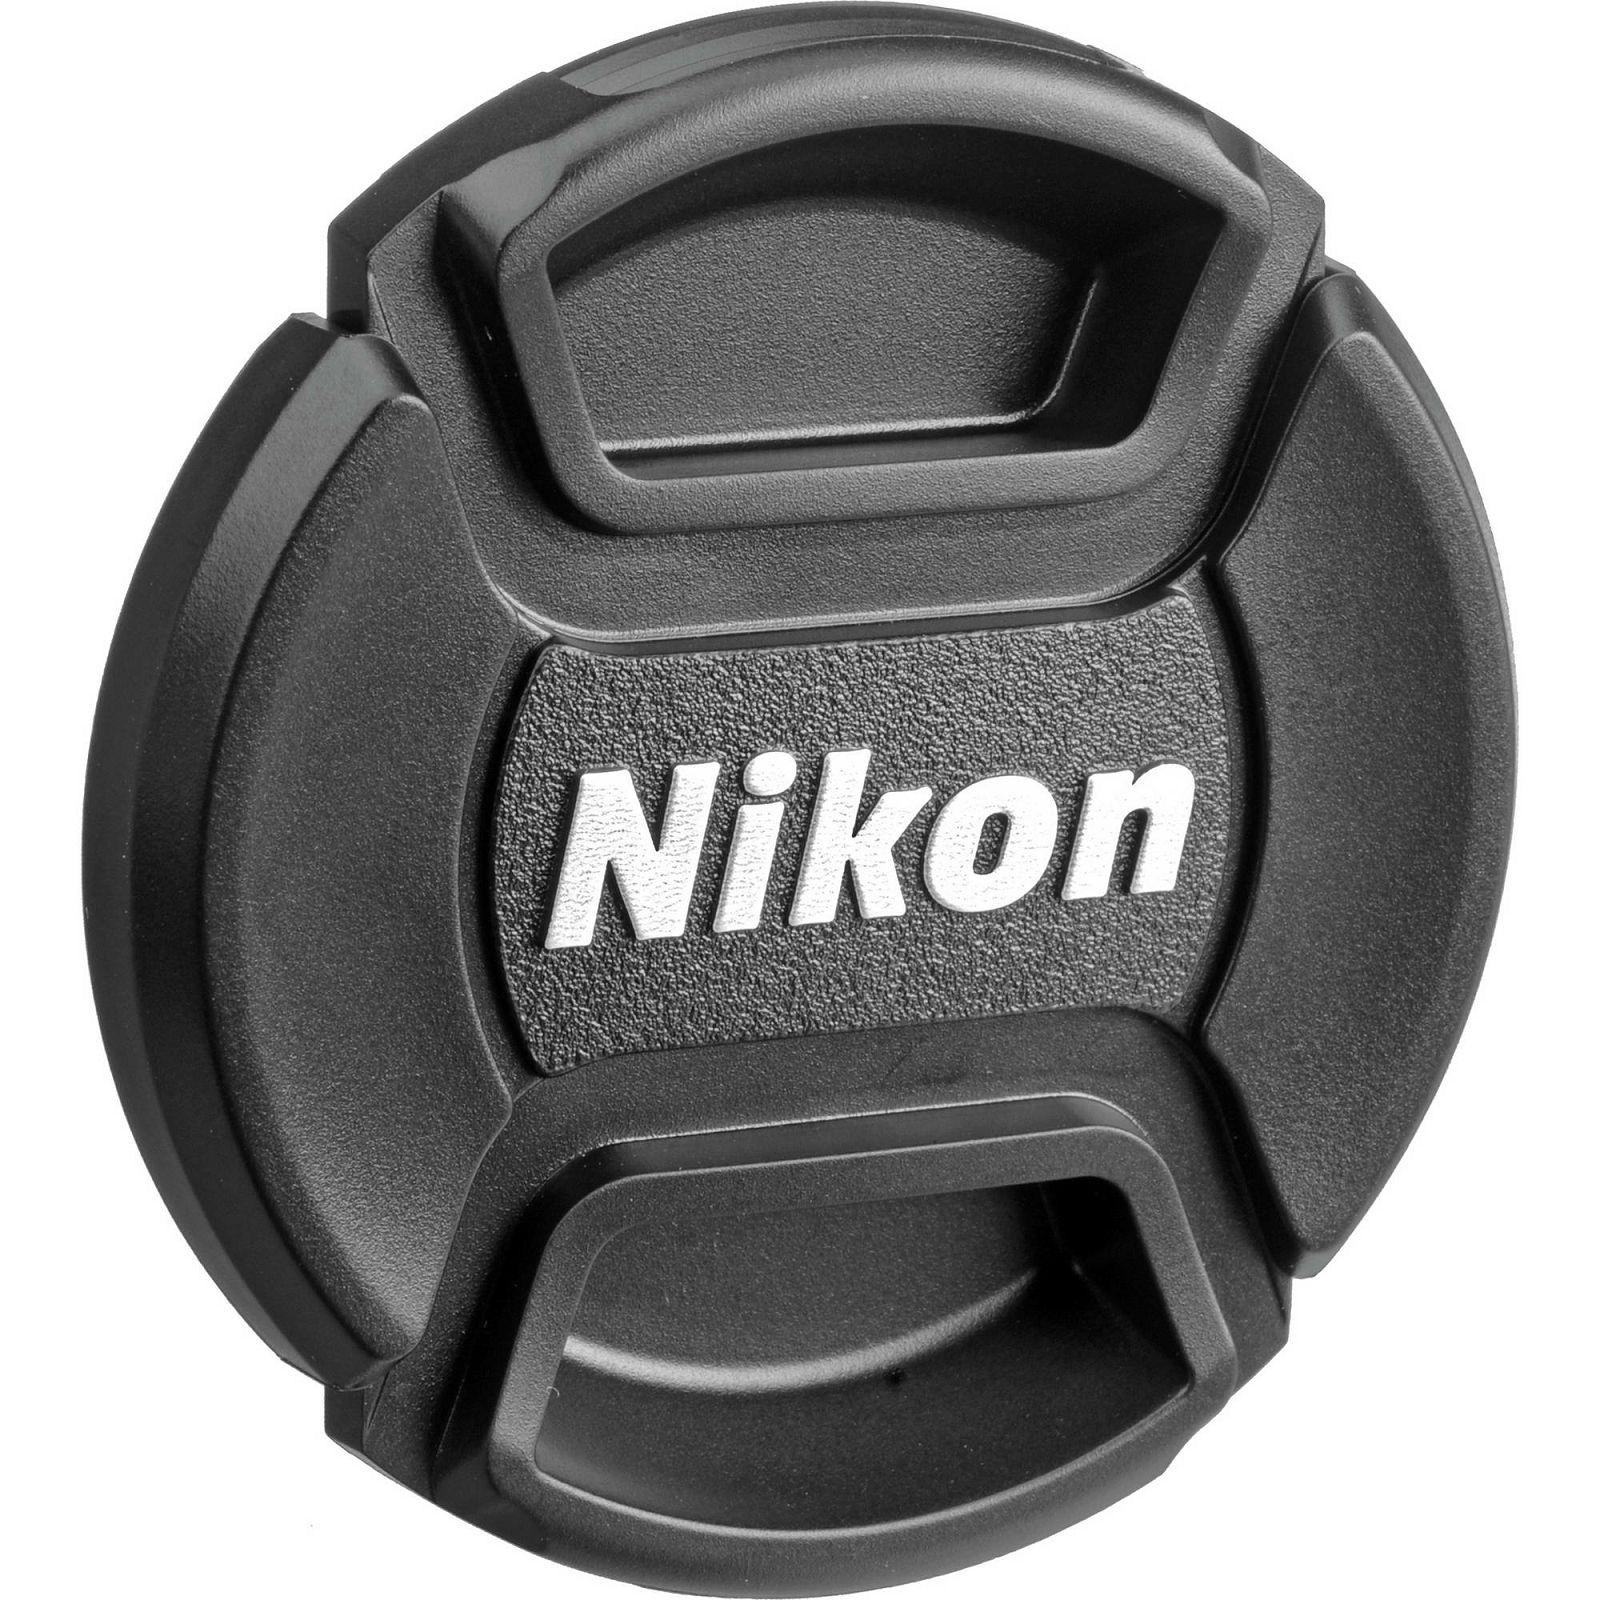 Nikon AF-S 50mm f/1.4G FX standardni objektiv fiksne žarišne duljine Nikkor 50 f/1.4 1.4 G auto focus prime lens (JAA014DA)